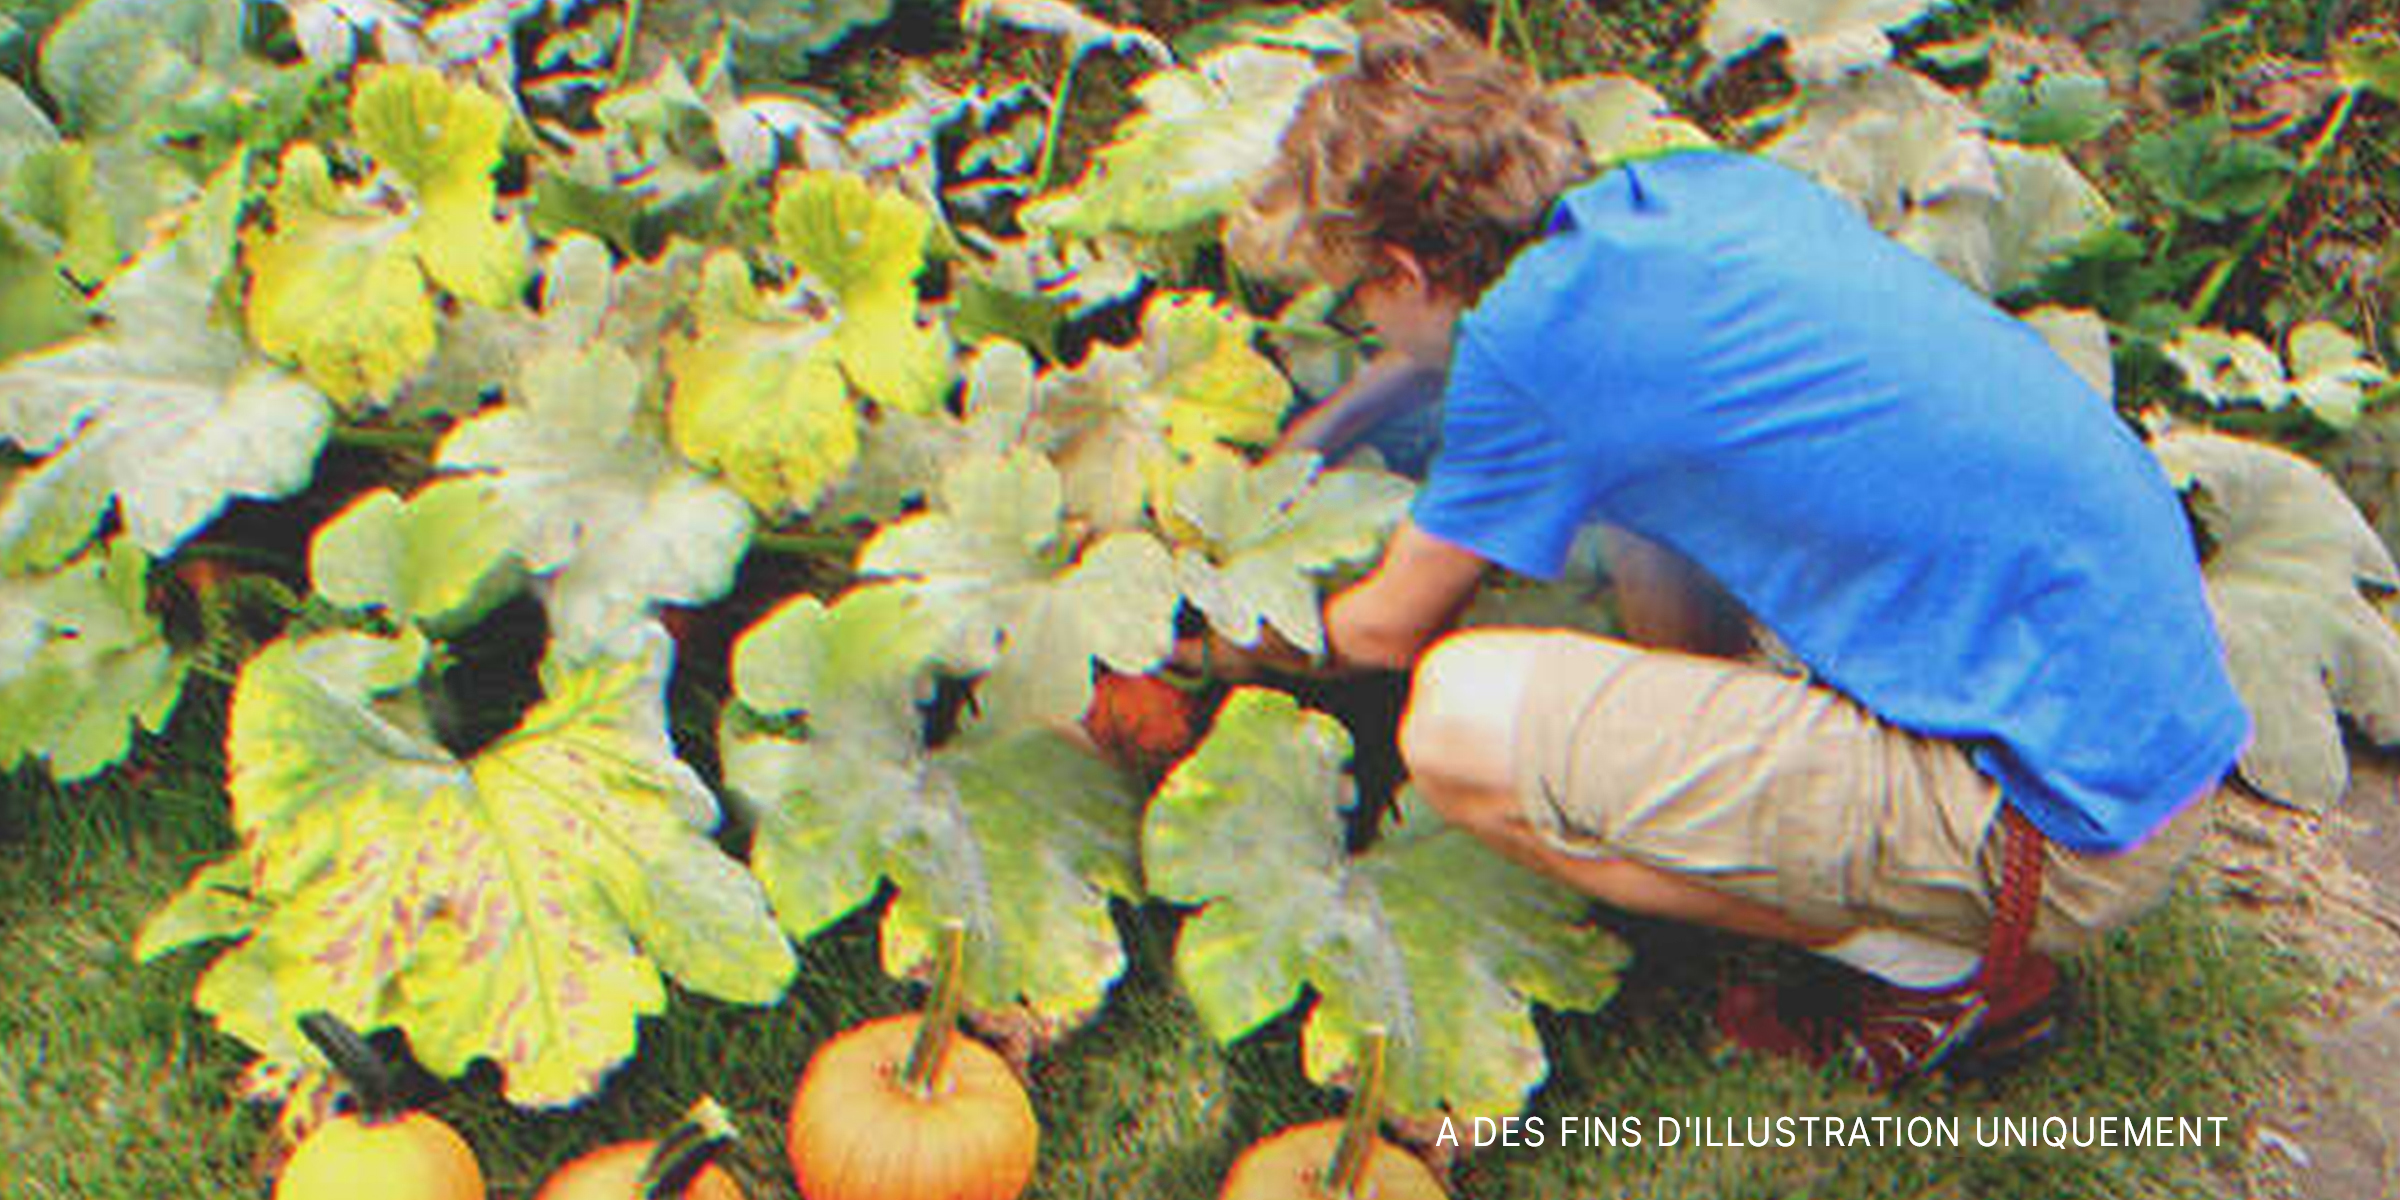 Garçon travaillant dans le jardin | Source : Shutterstock